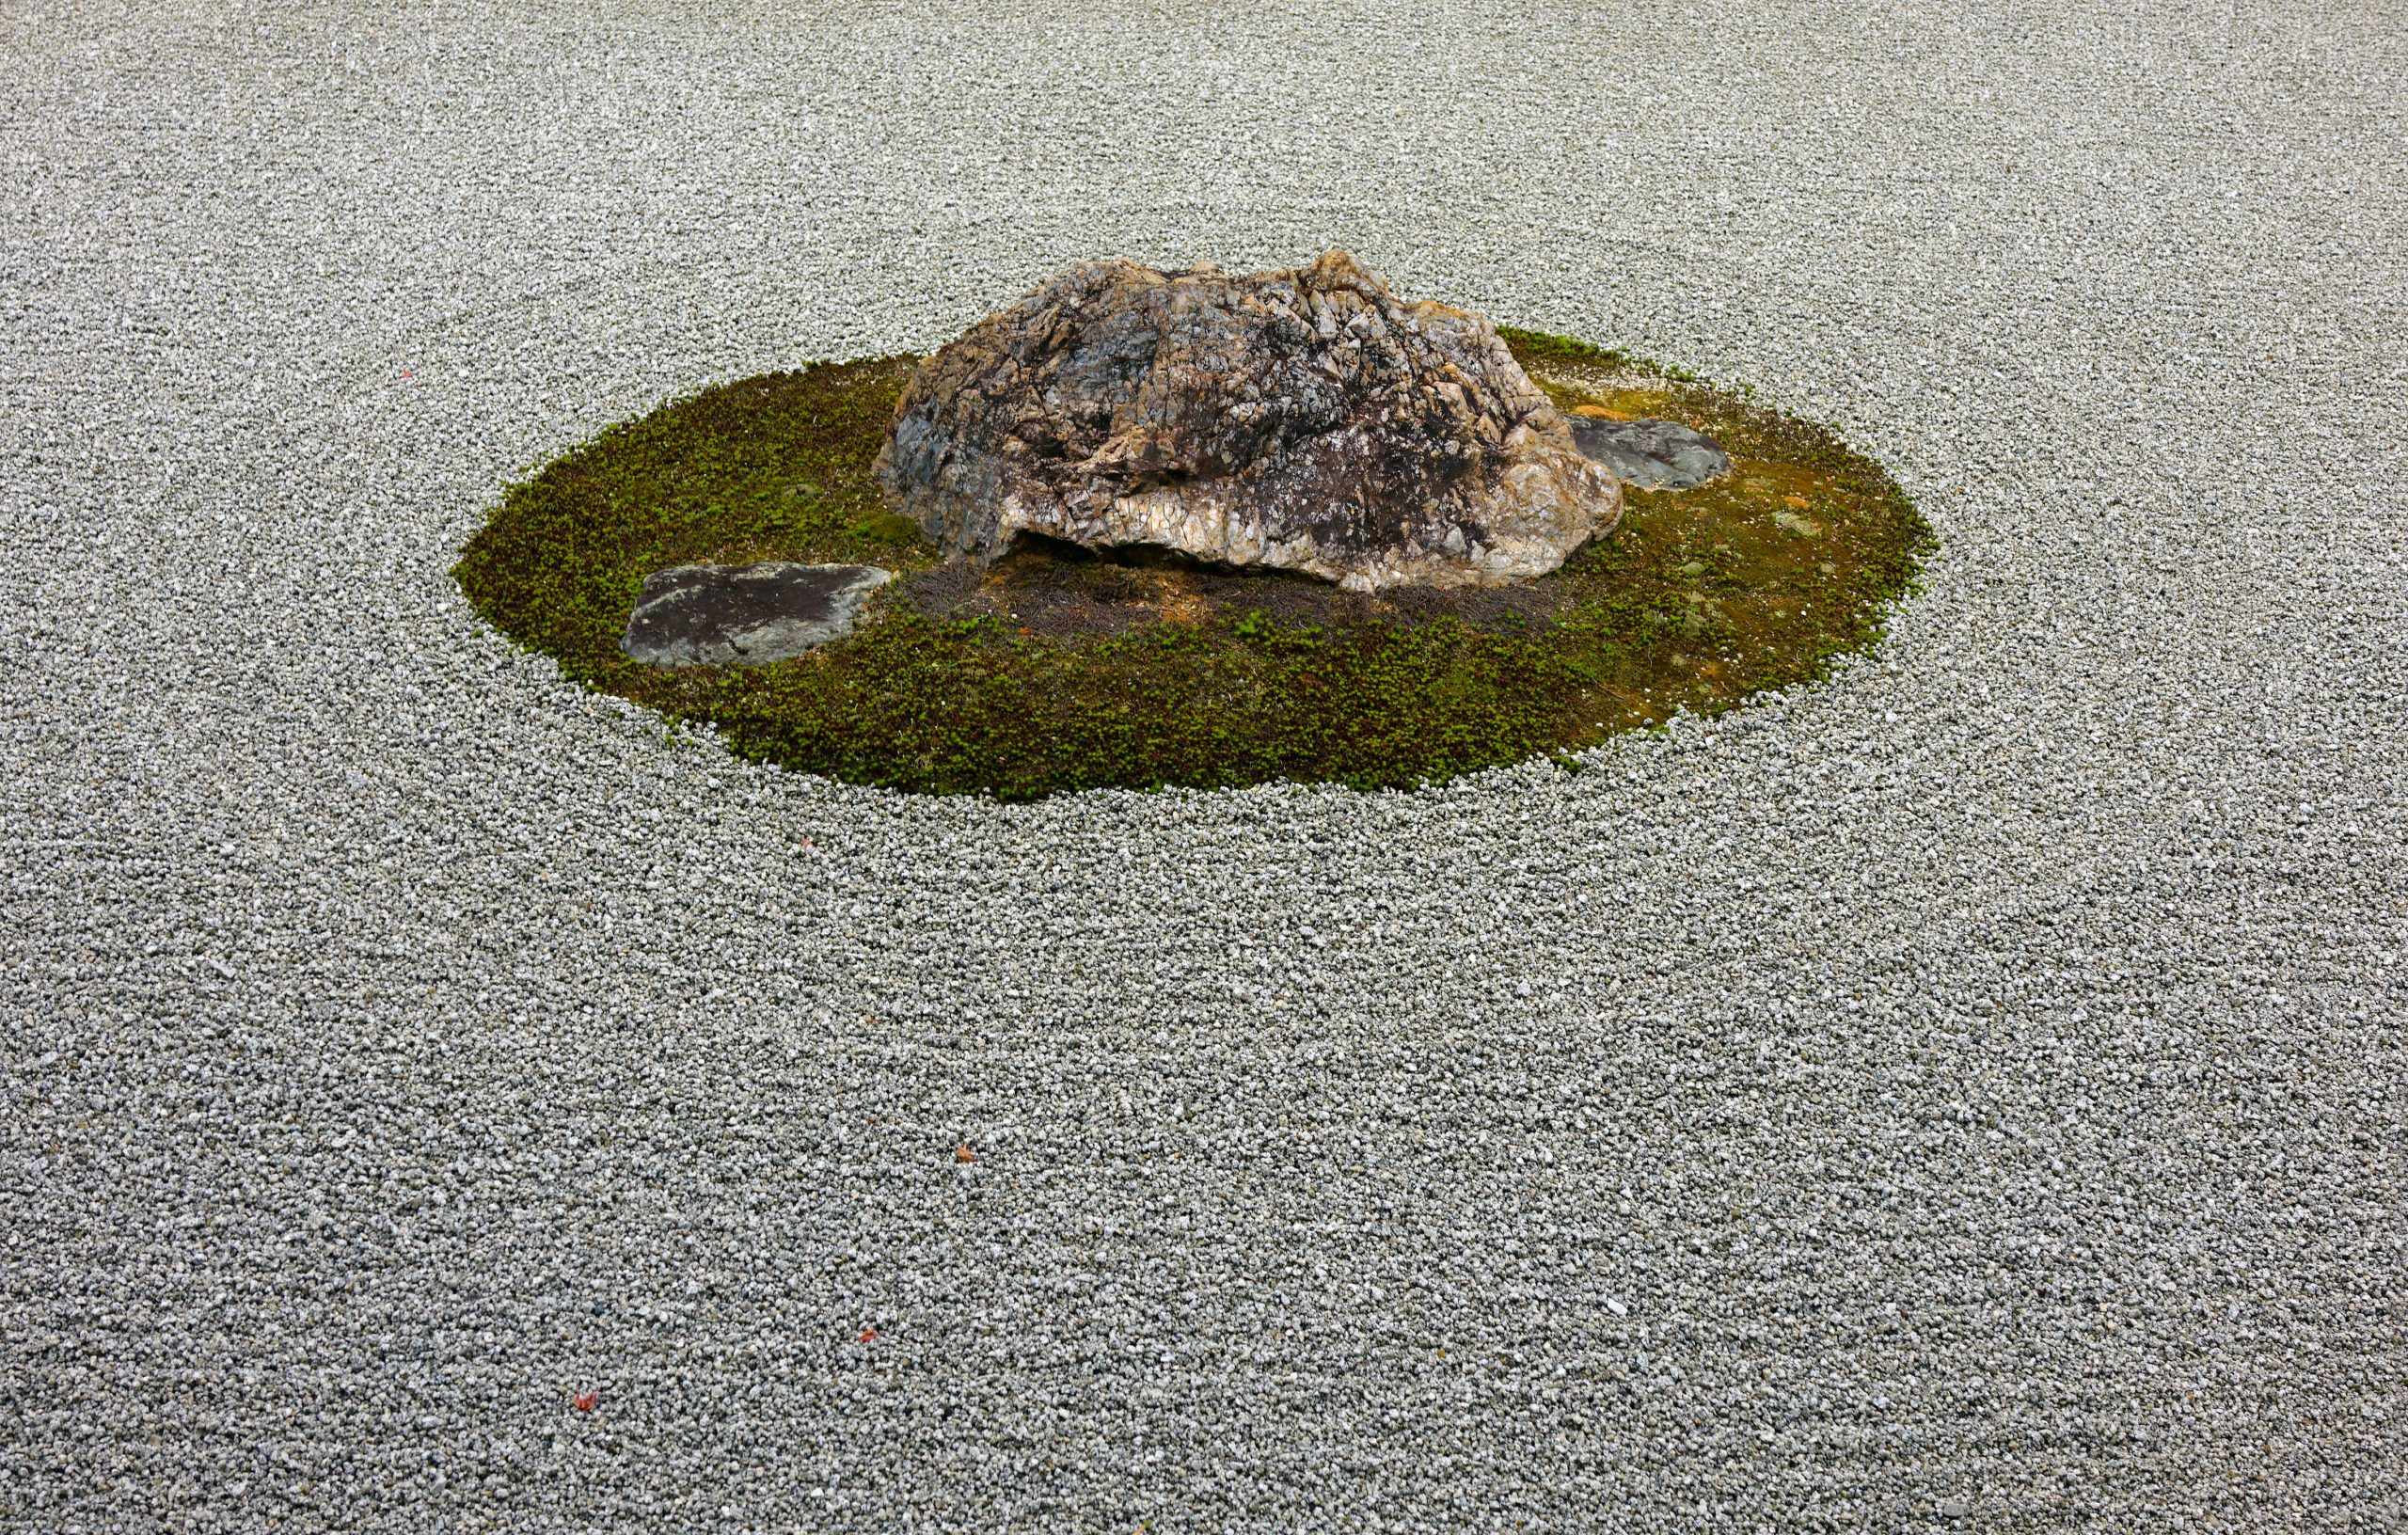 Dry rock garden, Ryōanji (Peaceful Dragon Temple), Kyoto, Japan (image: Steven Zucker, CC BY-NC-SA 2.0)